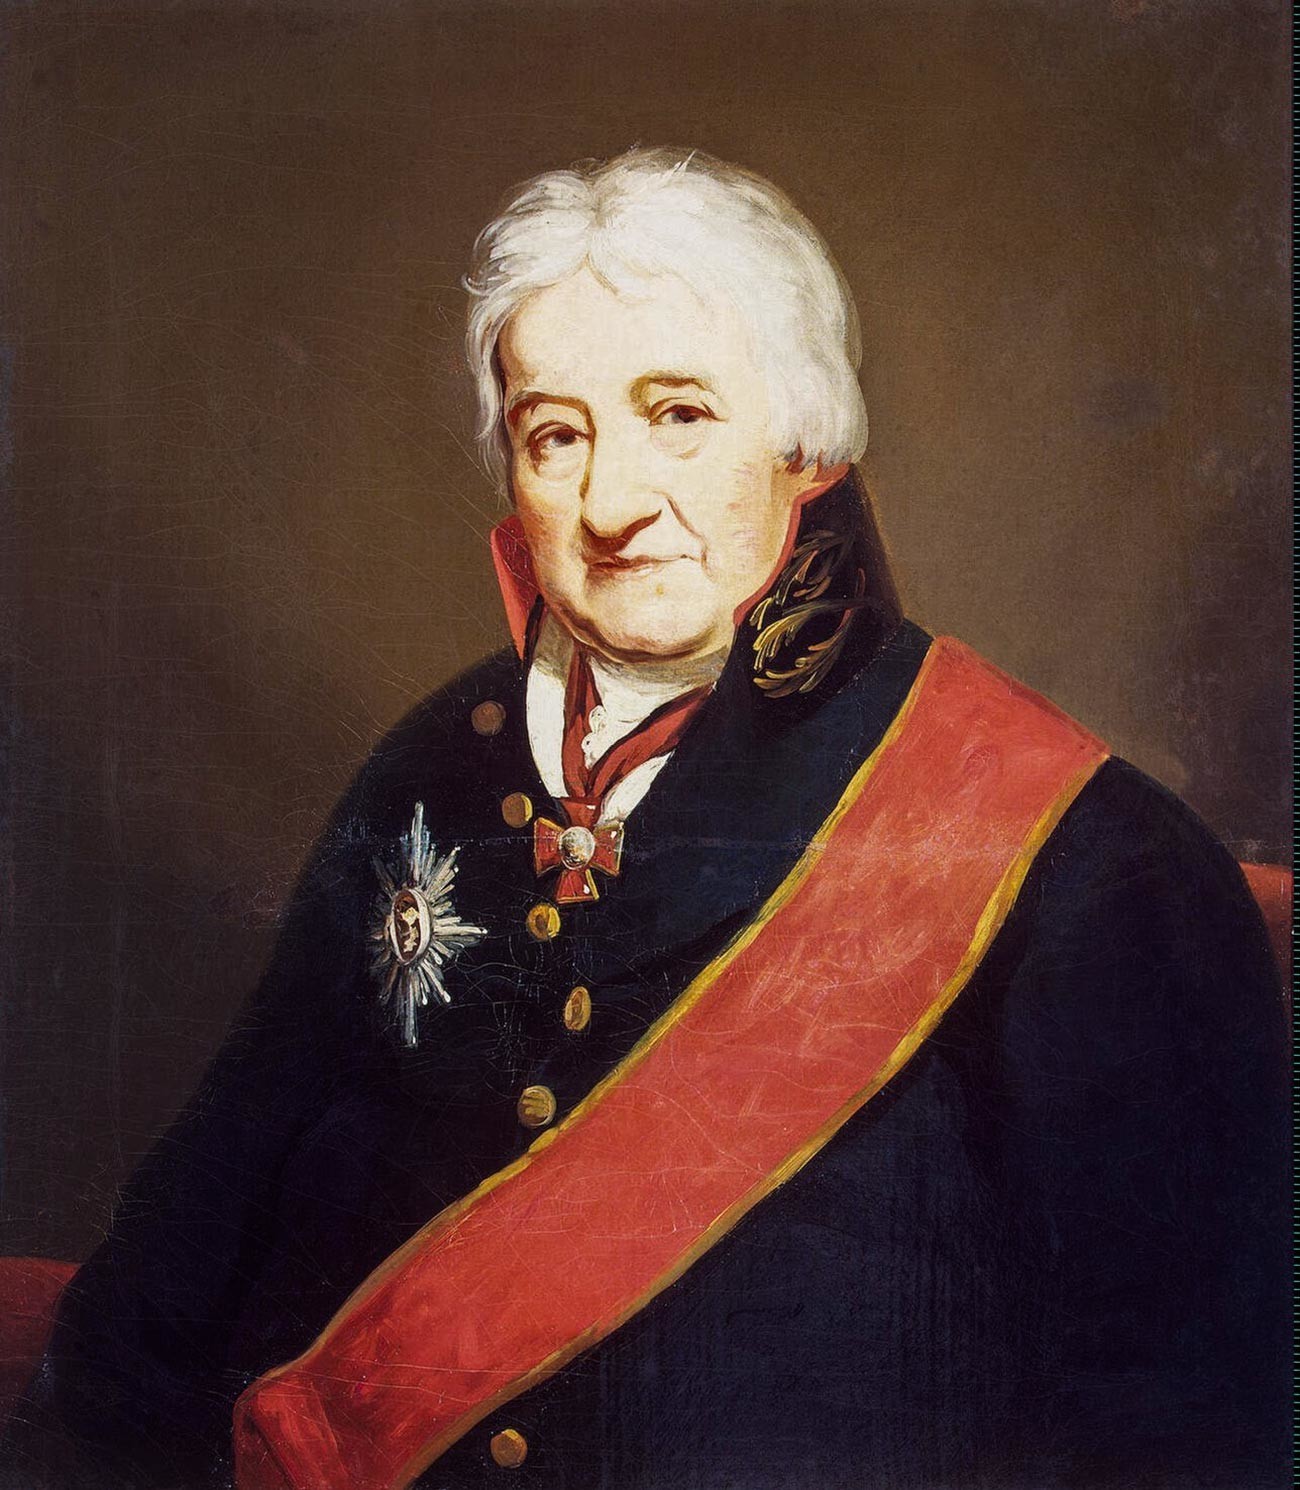 Charles Gascoigne von James Saxon, um 1804.